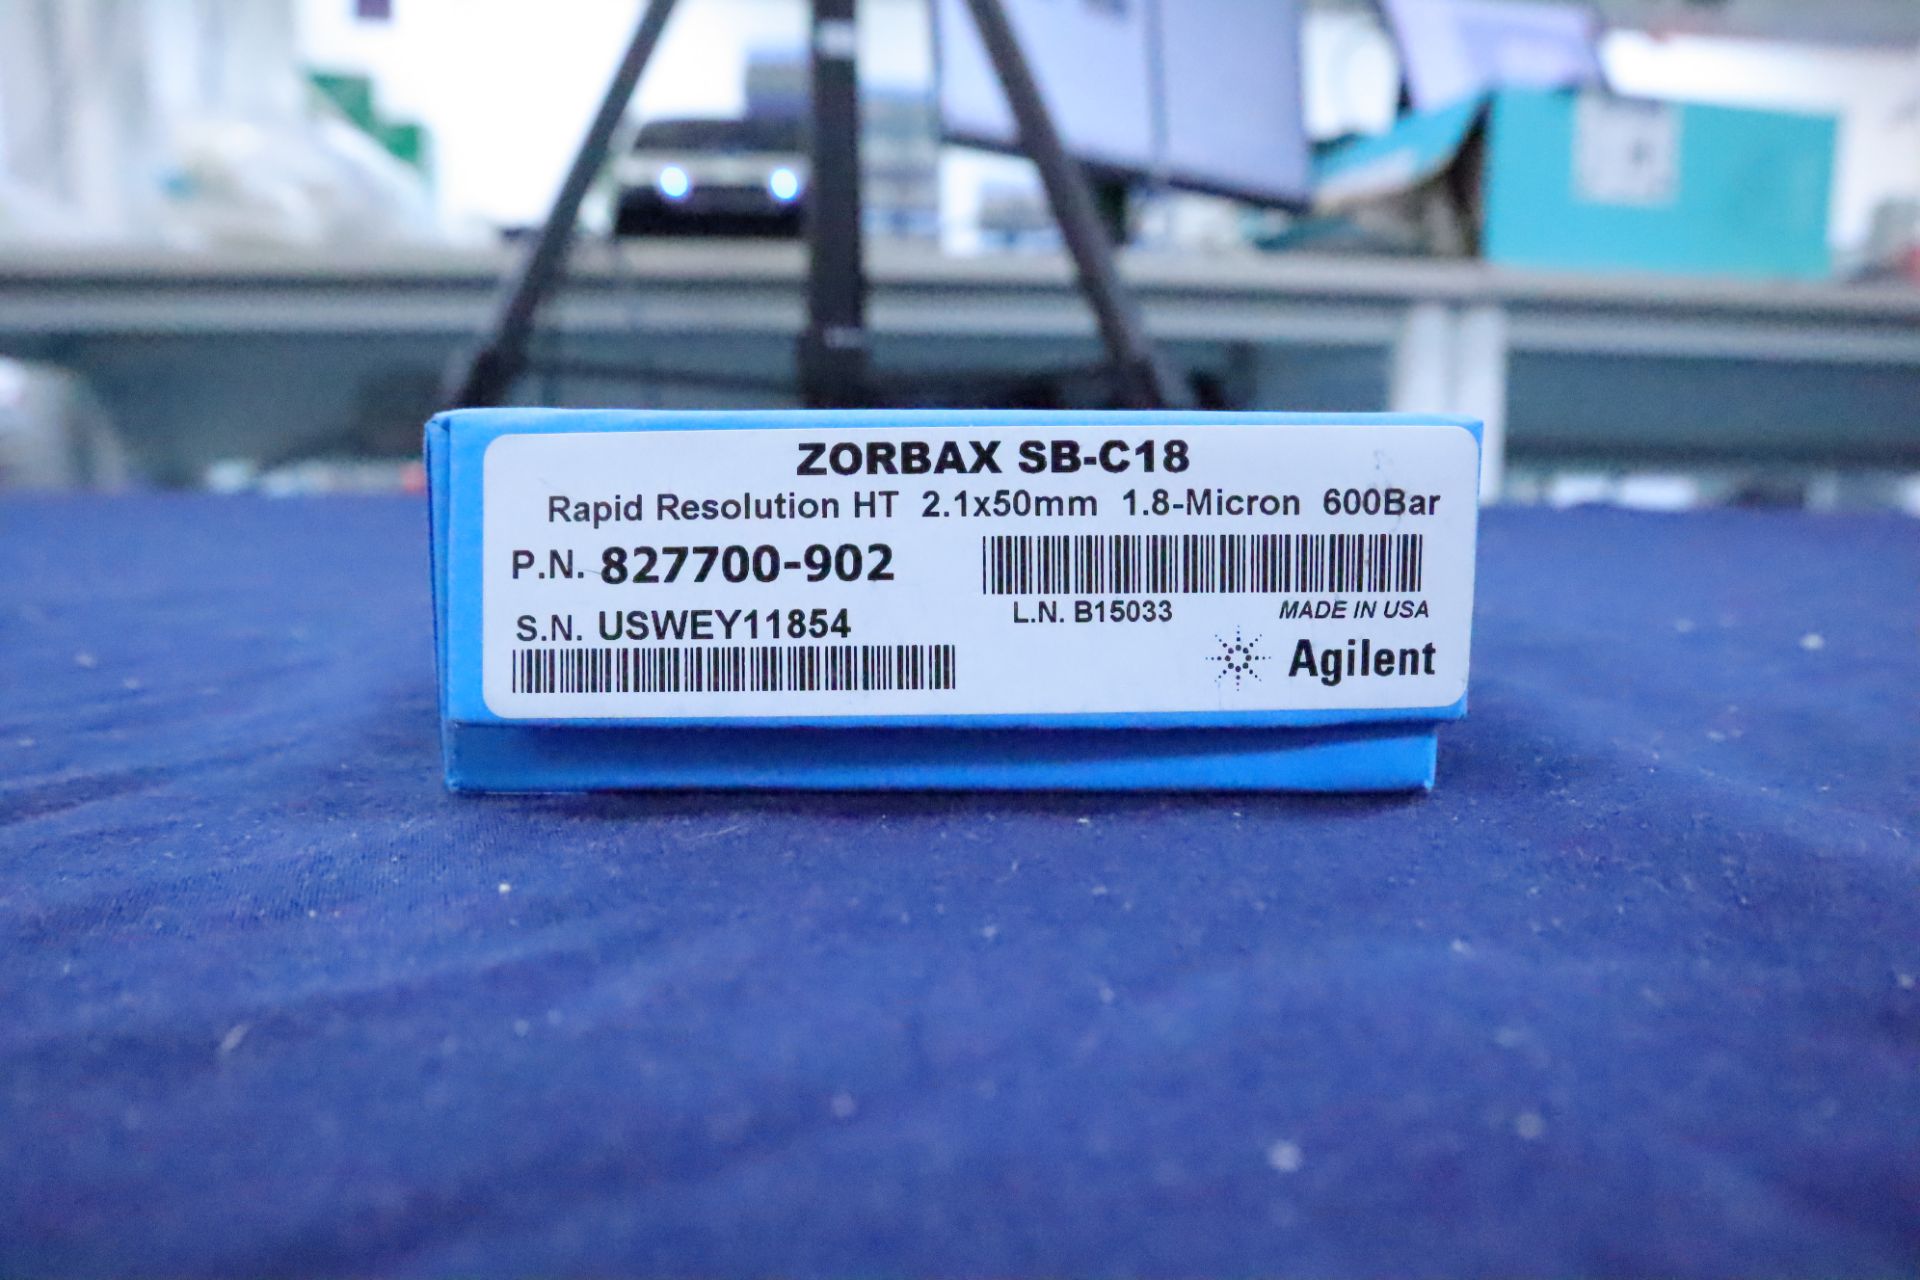 (NIB) Zorbax SB-C18 for Agilent Rapid Resolution HT 2.1x50mm 1.8-Micron 600Bar (PN: 827700-902) - Image 2 of 3